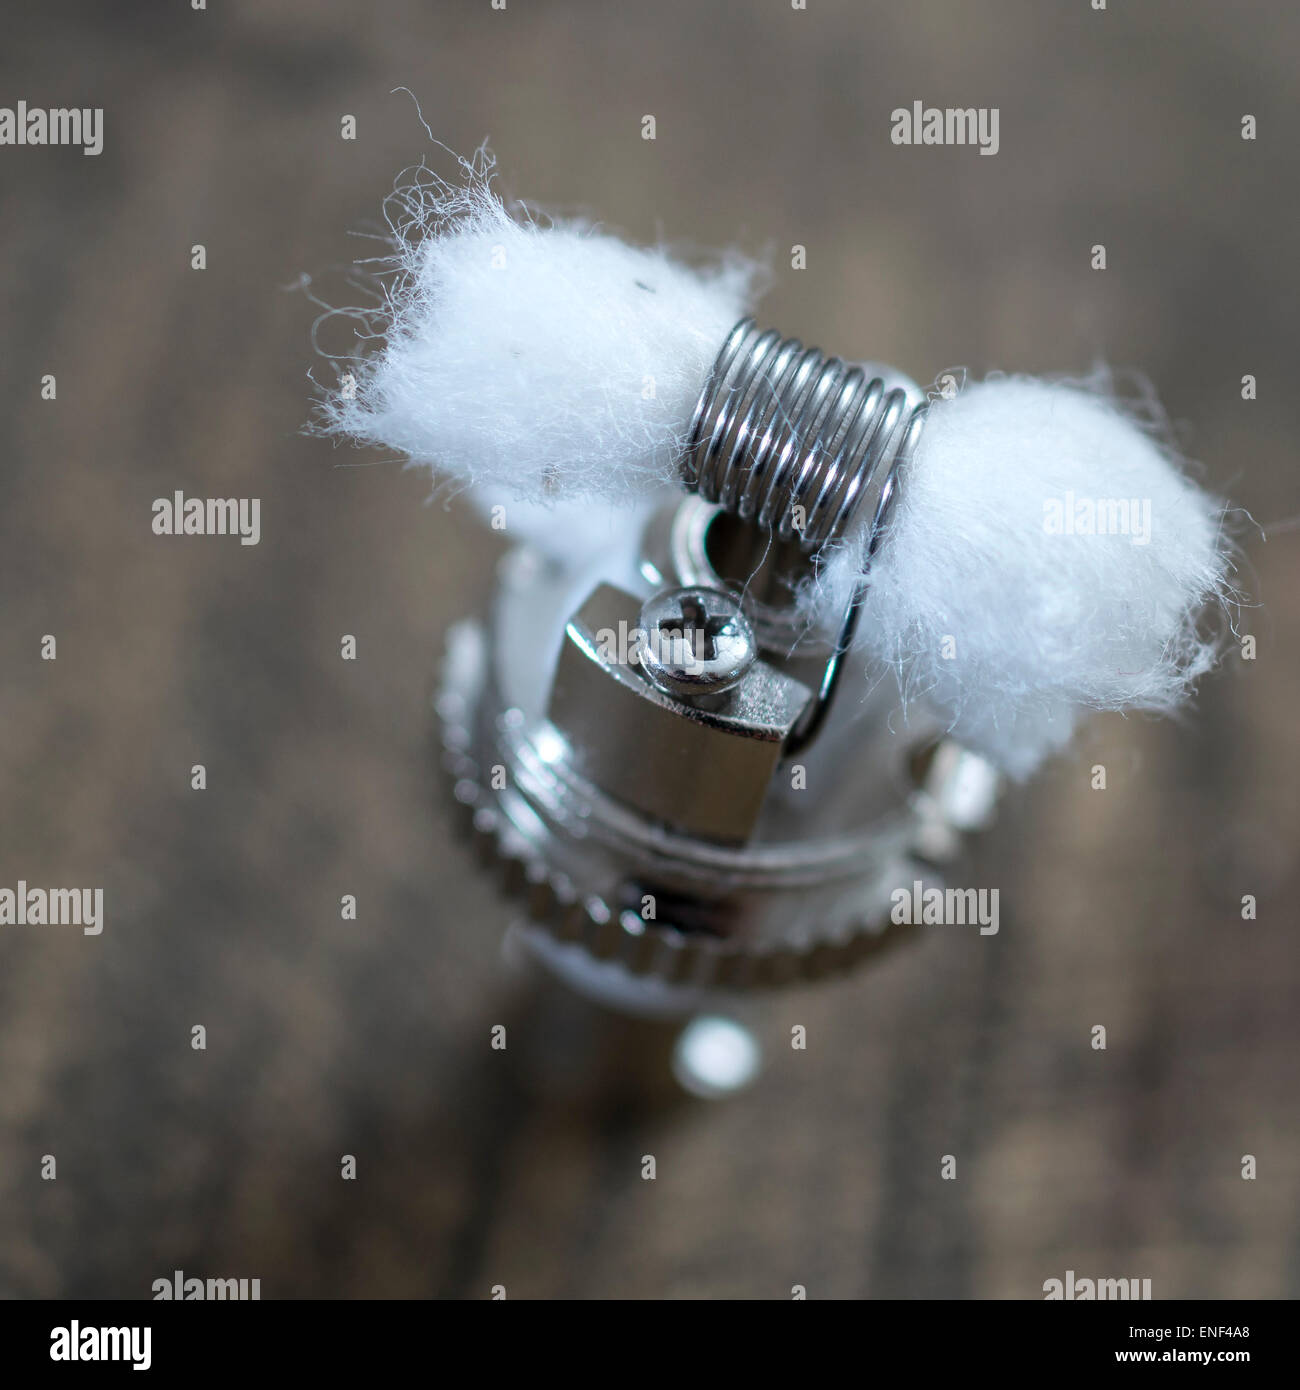 Rebuildable Dripping Vaping Atomizer, close up Stock Photo